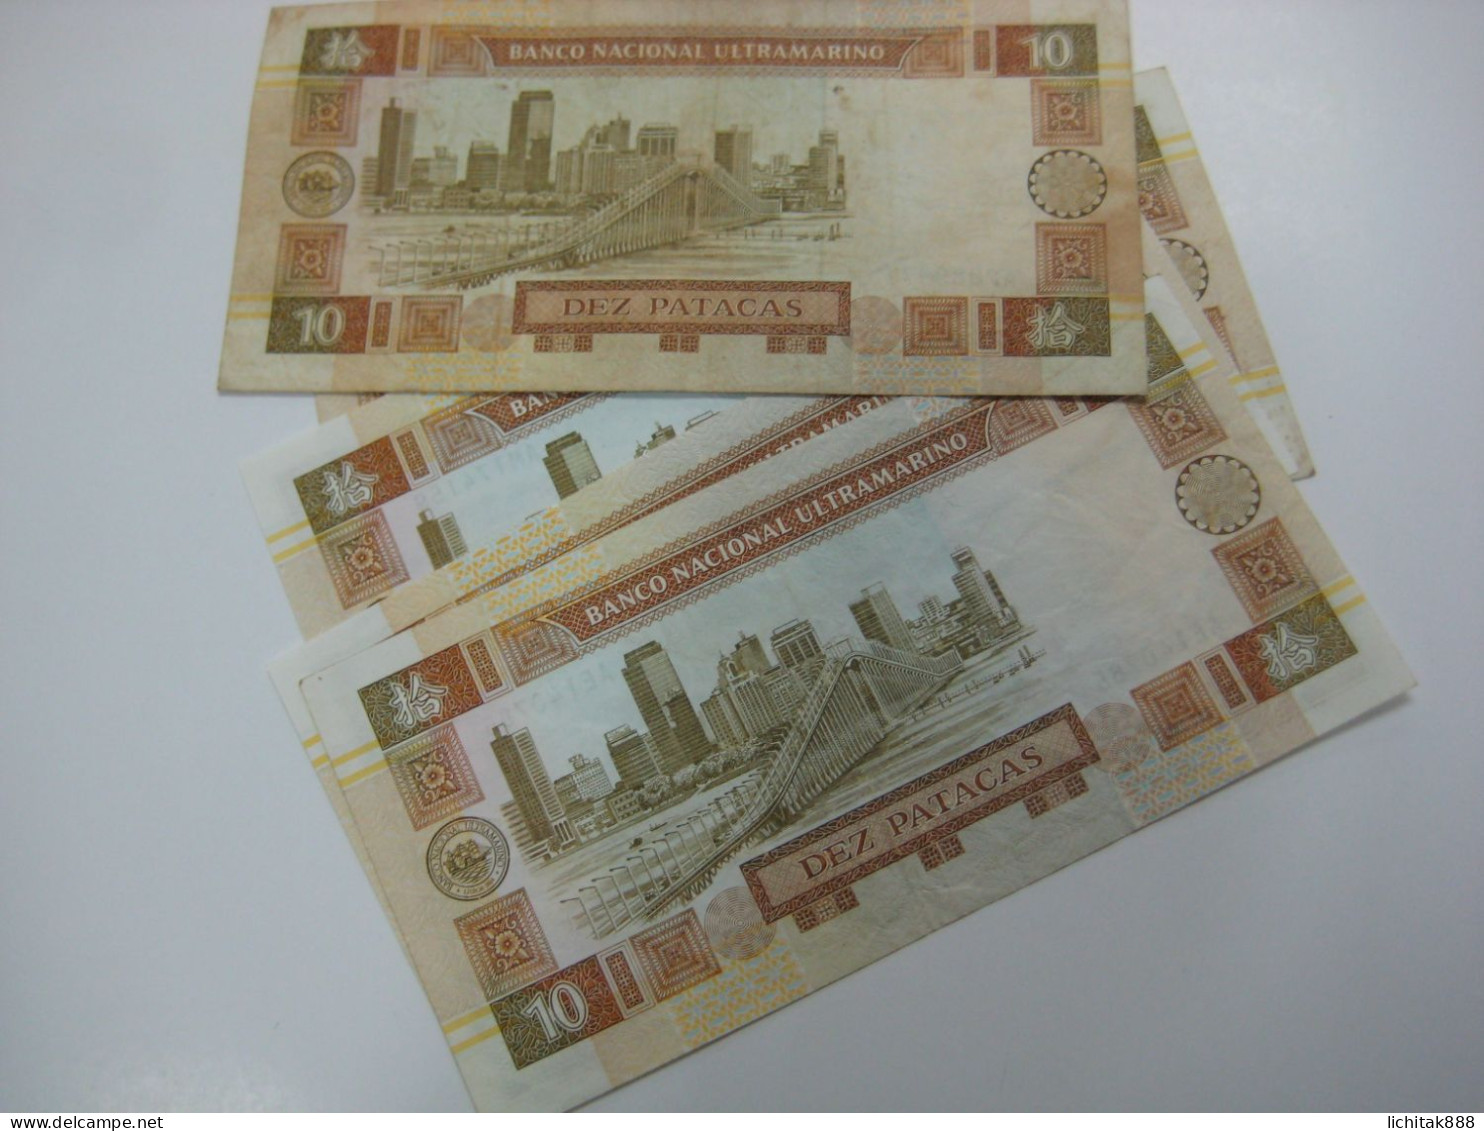 1991 Macau Banco Nacional Ultrmarino $10 Patacas Banknote Used €2/pc Number Random - Macau